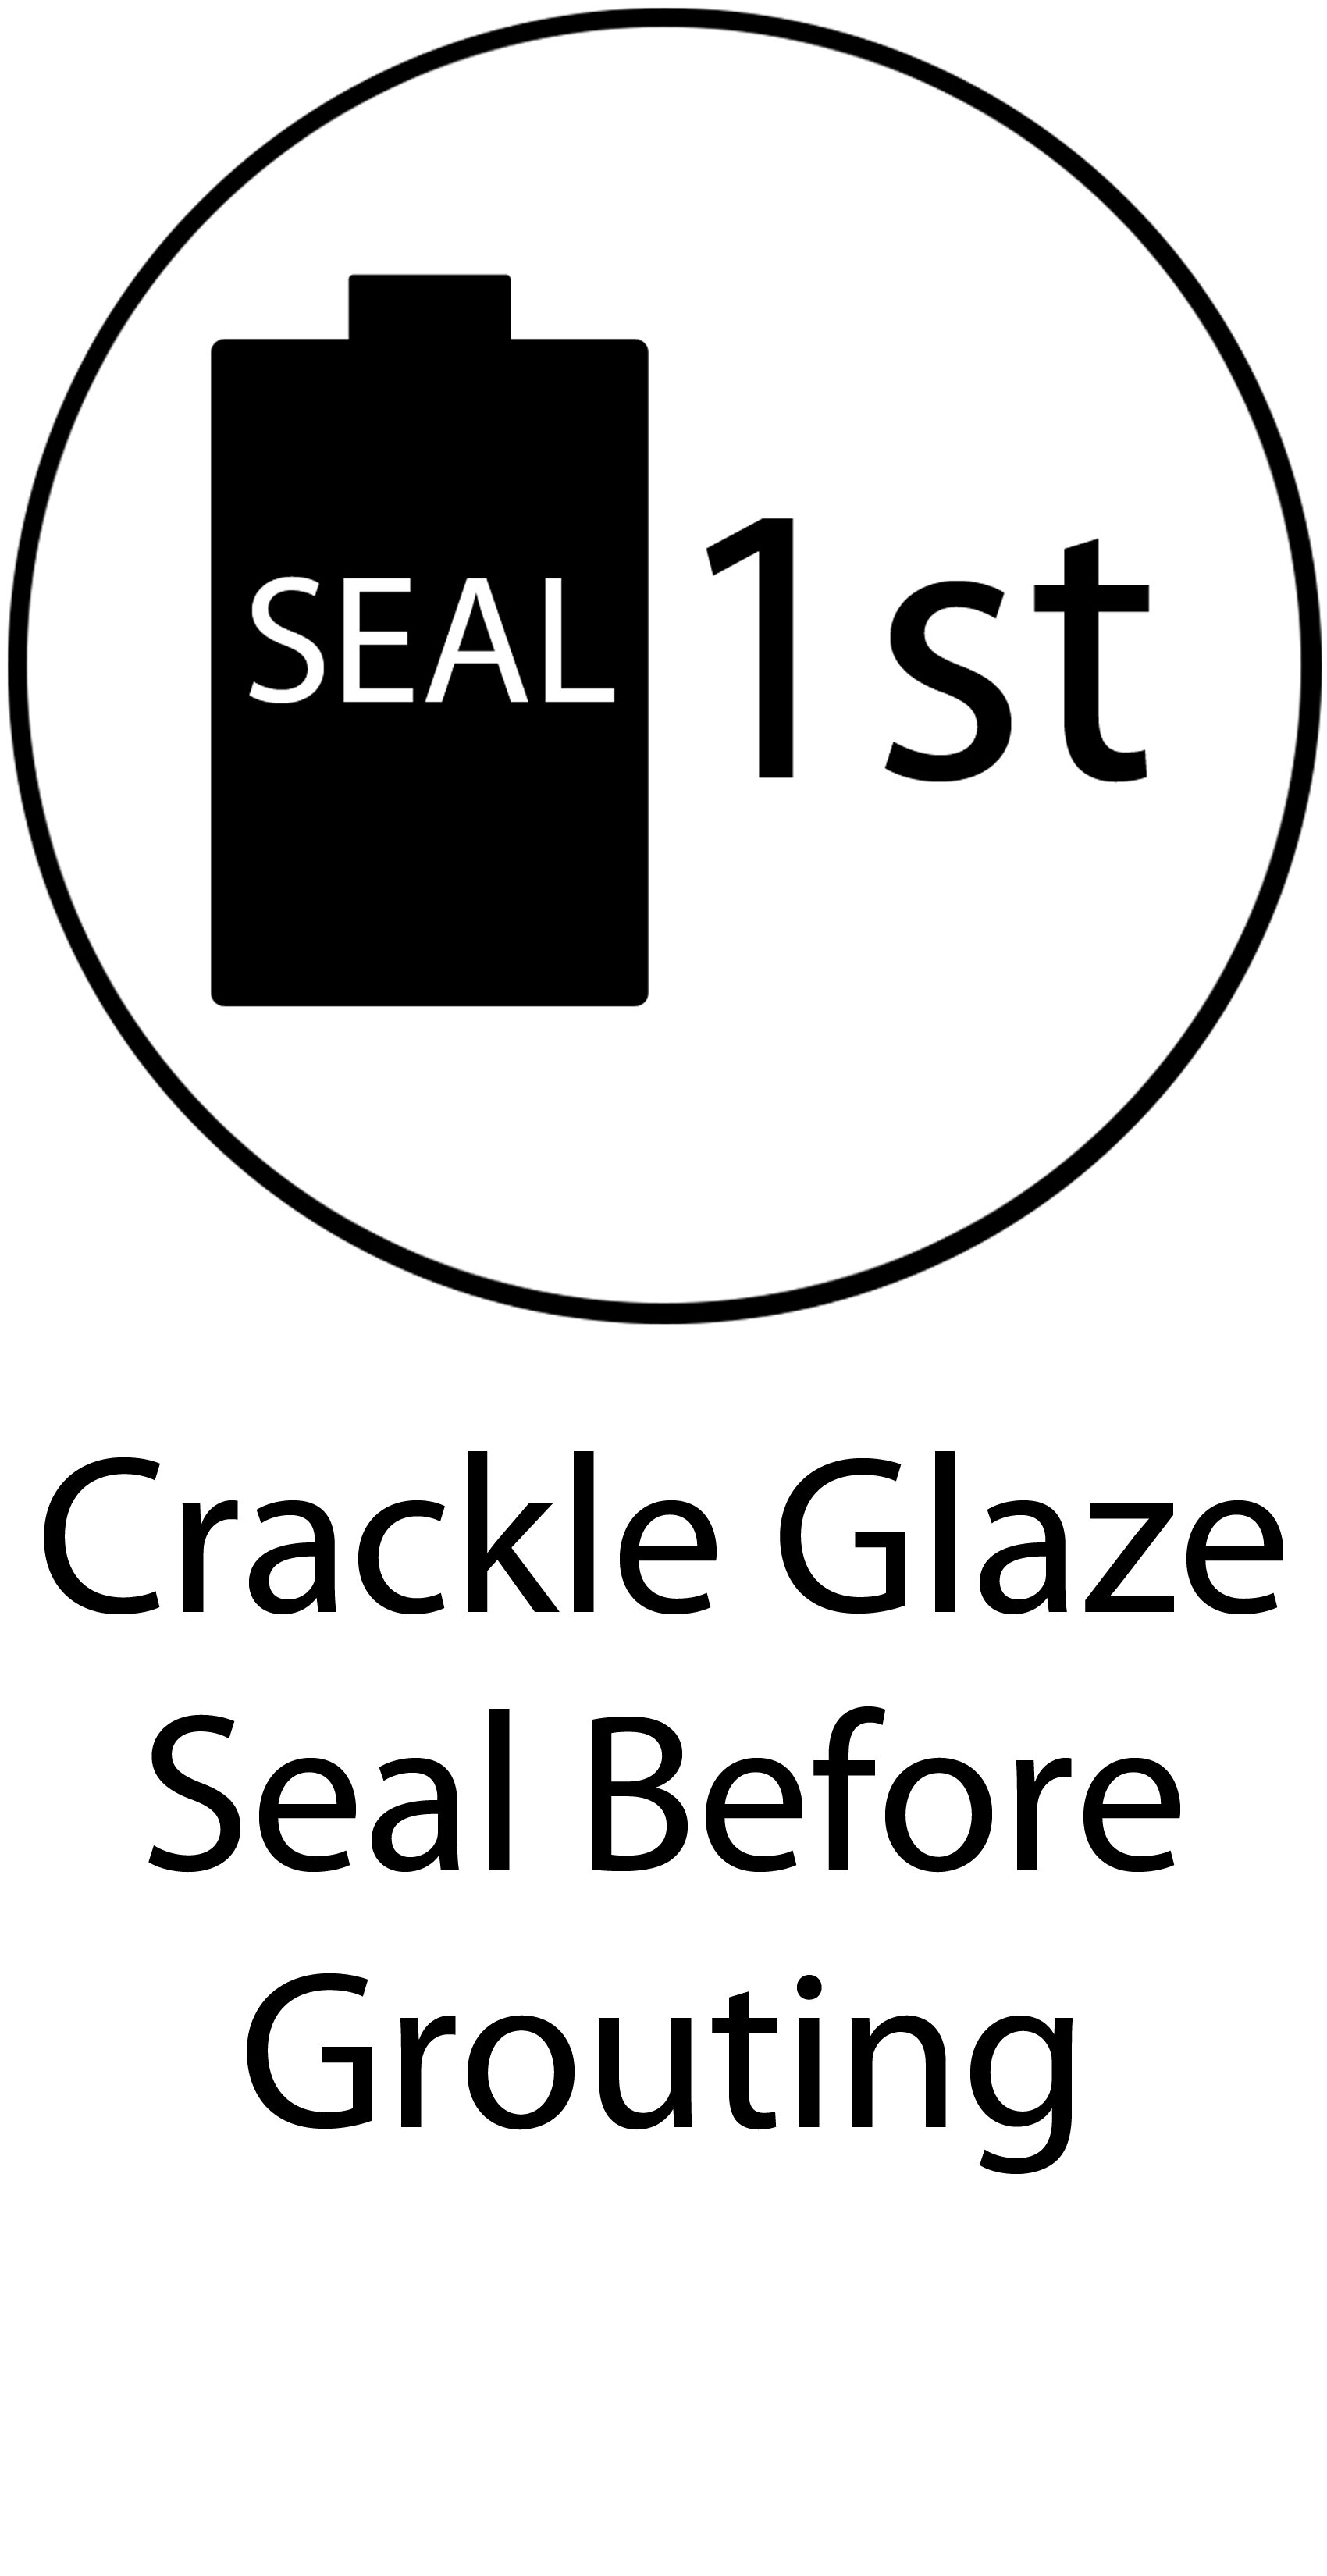 05.1Crackle Glaze Seal Before Grouting.jpg